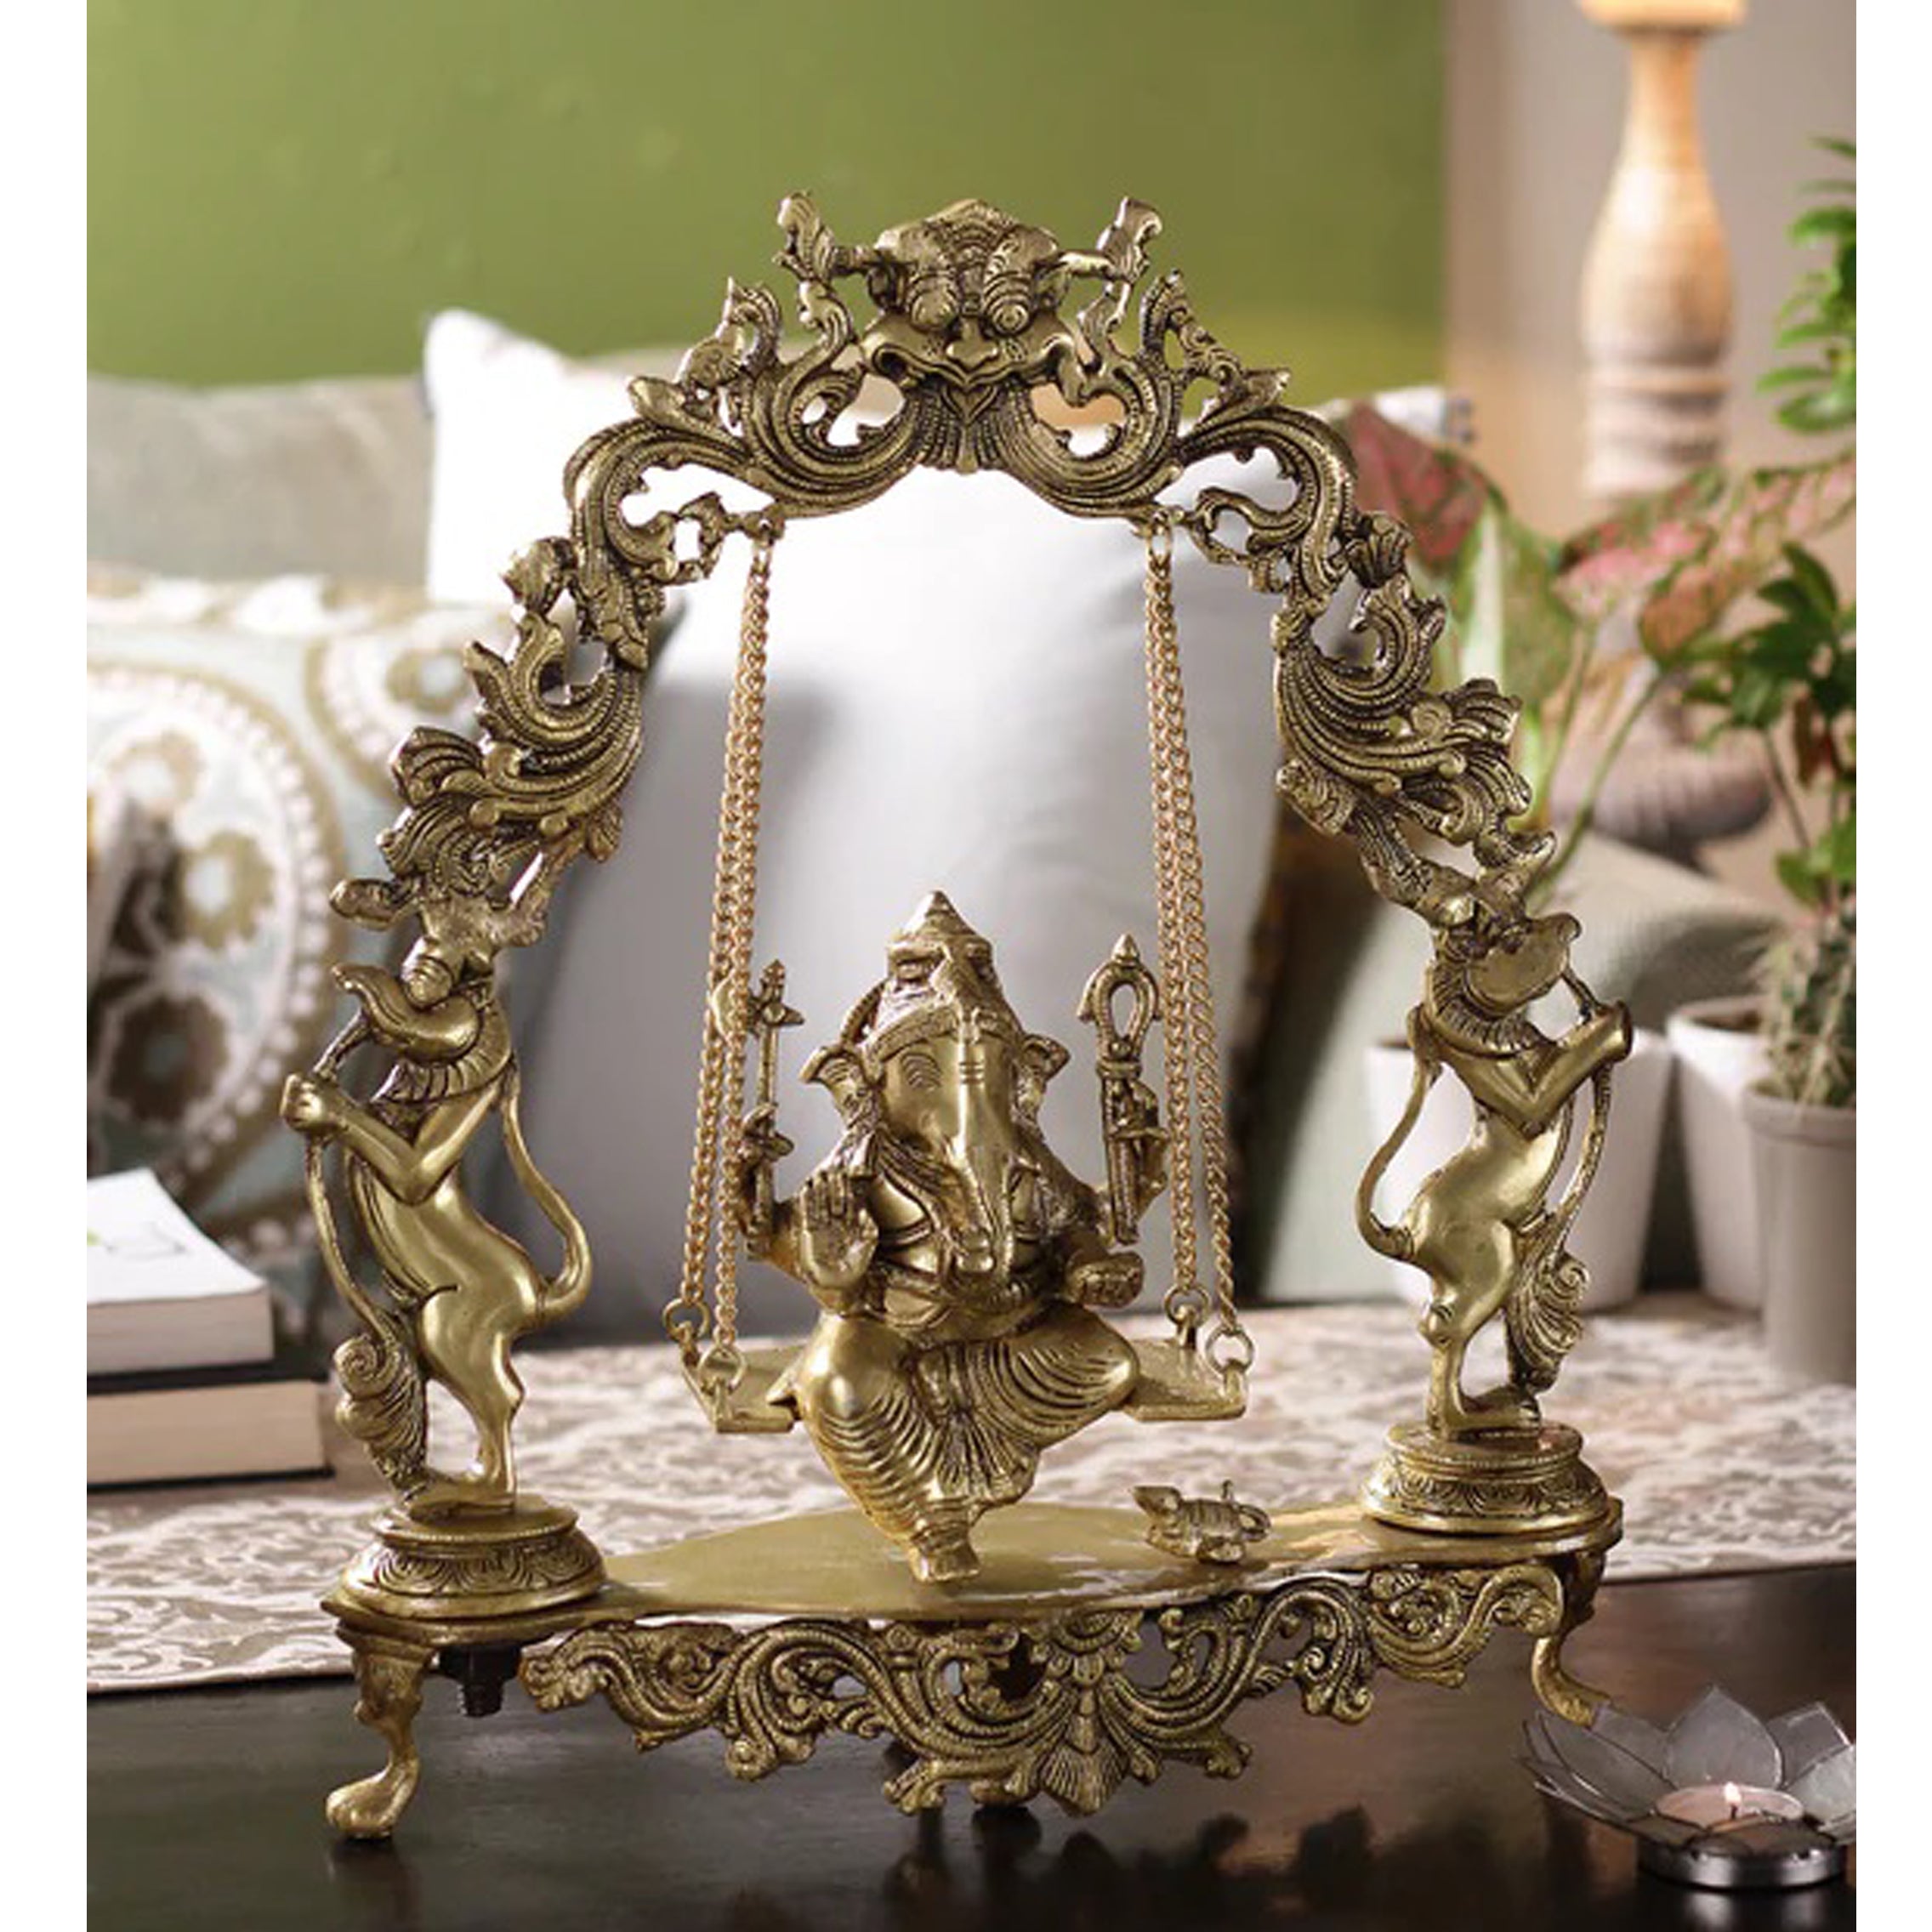 Brass Statue Ganesha on Jhula Swing Idol for Home Mandir